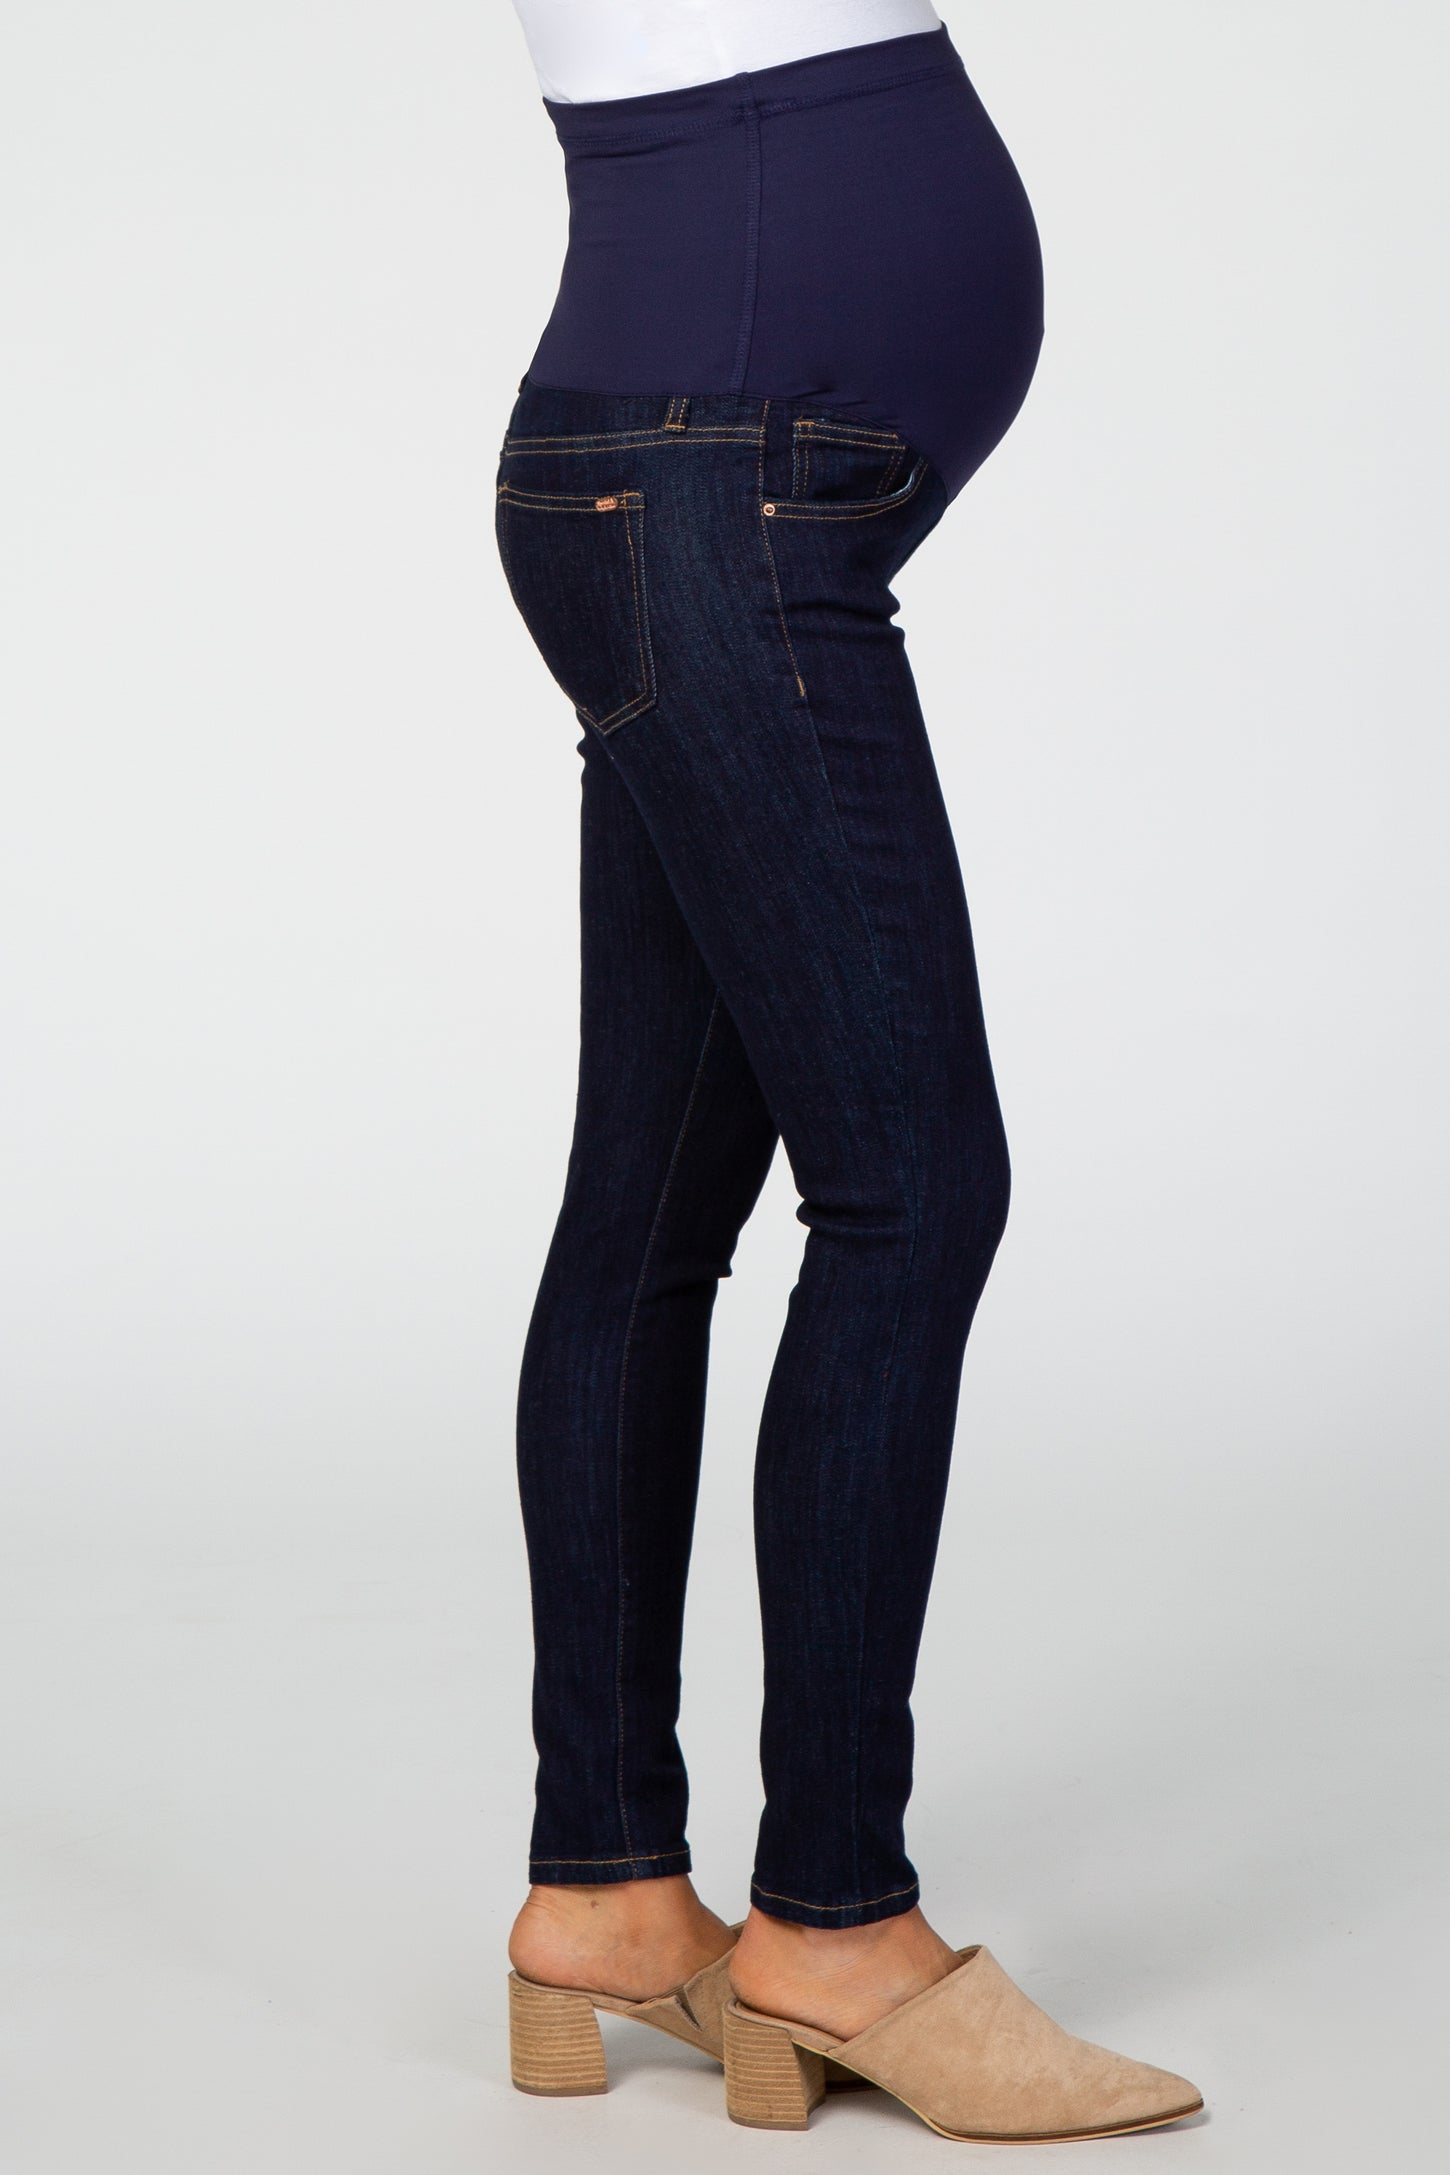 PinkBlush Navy Blue Maternity Skinny Jeans